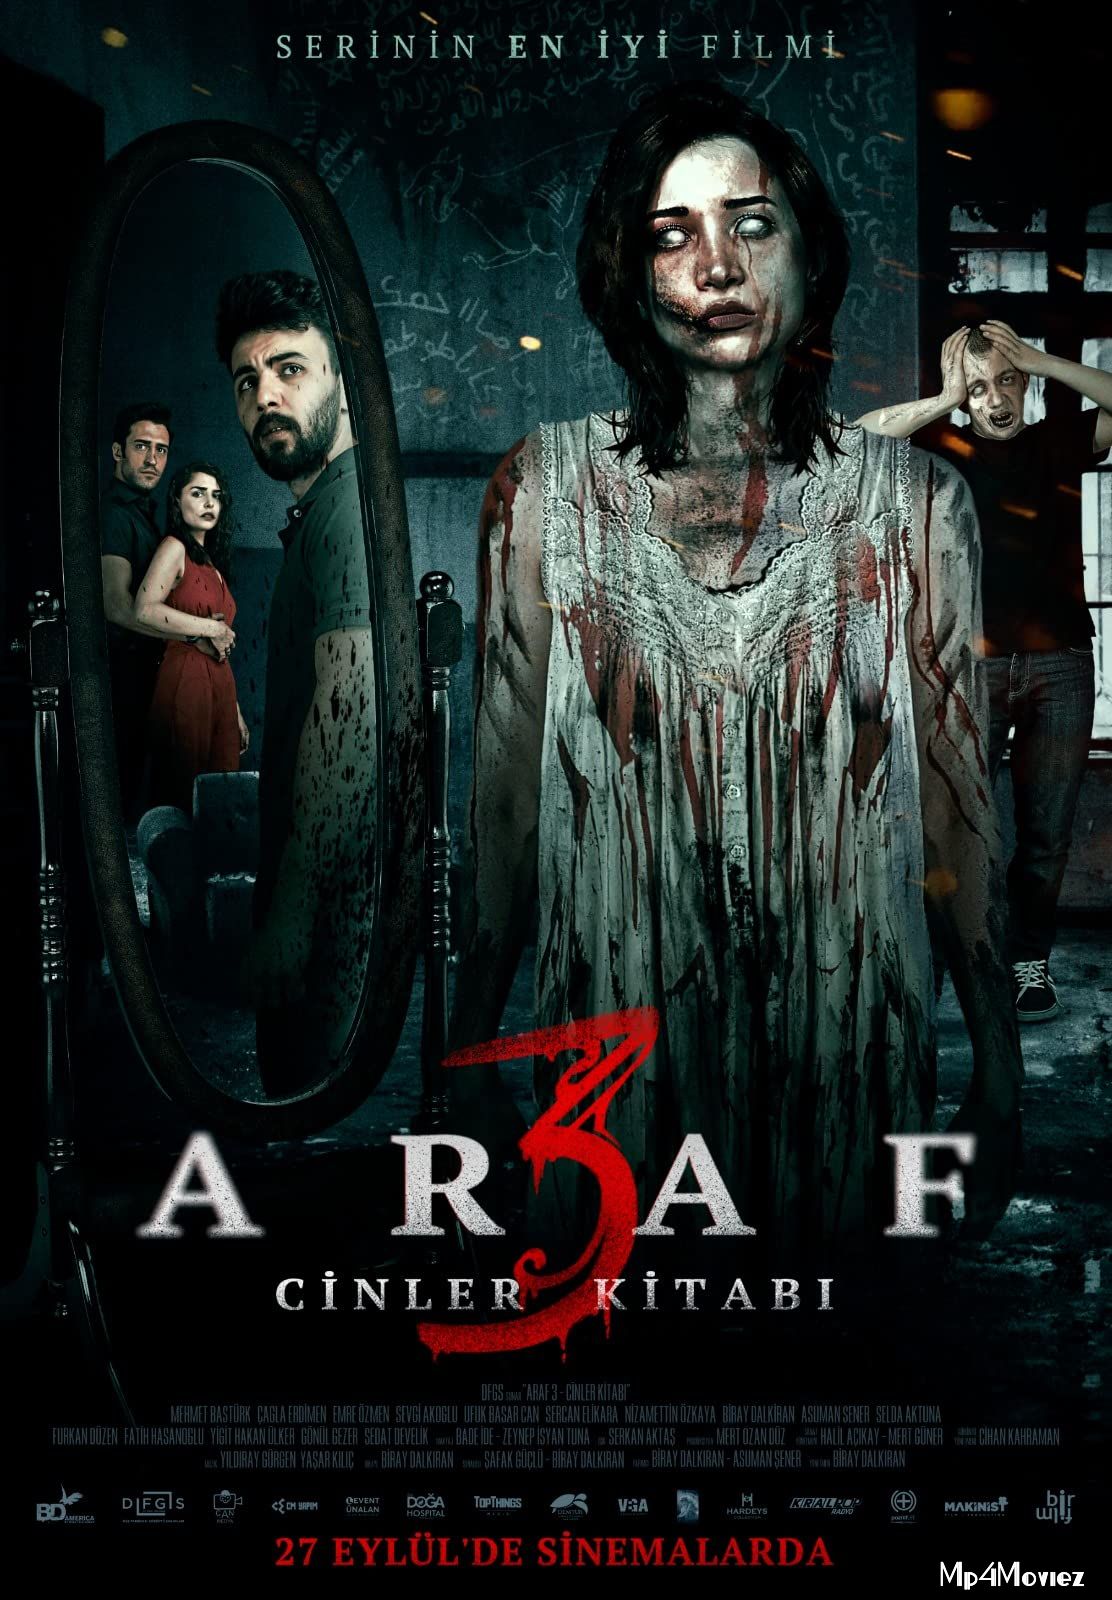 Araf 3 Cinler Kitabi (2019) Hindi Dubbed HDRip download full movie